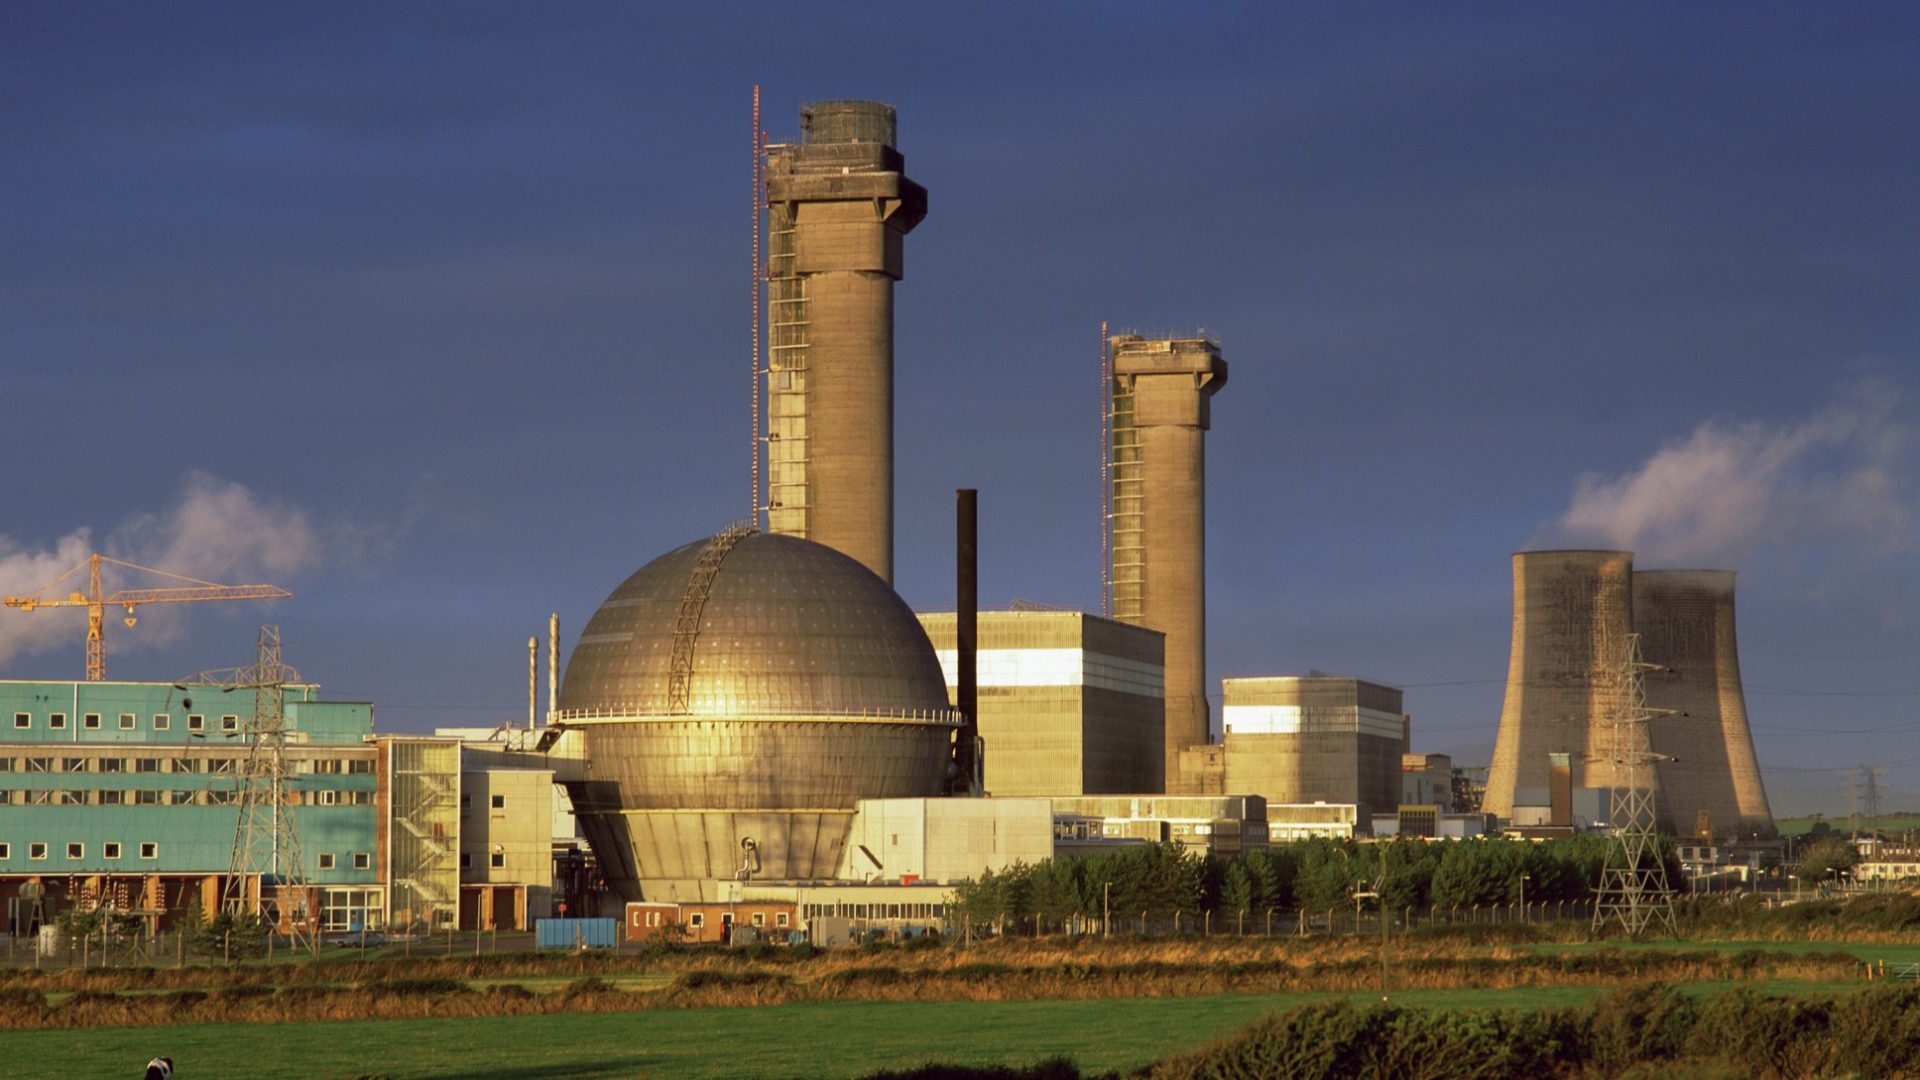 The Sellafield nuclear site in Cumbria (image: Dreamstime)